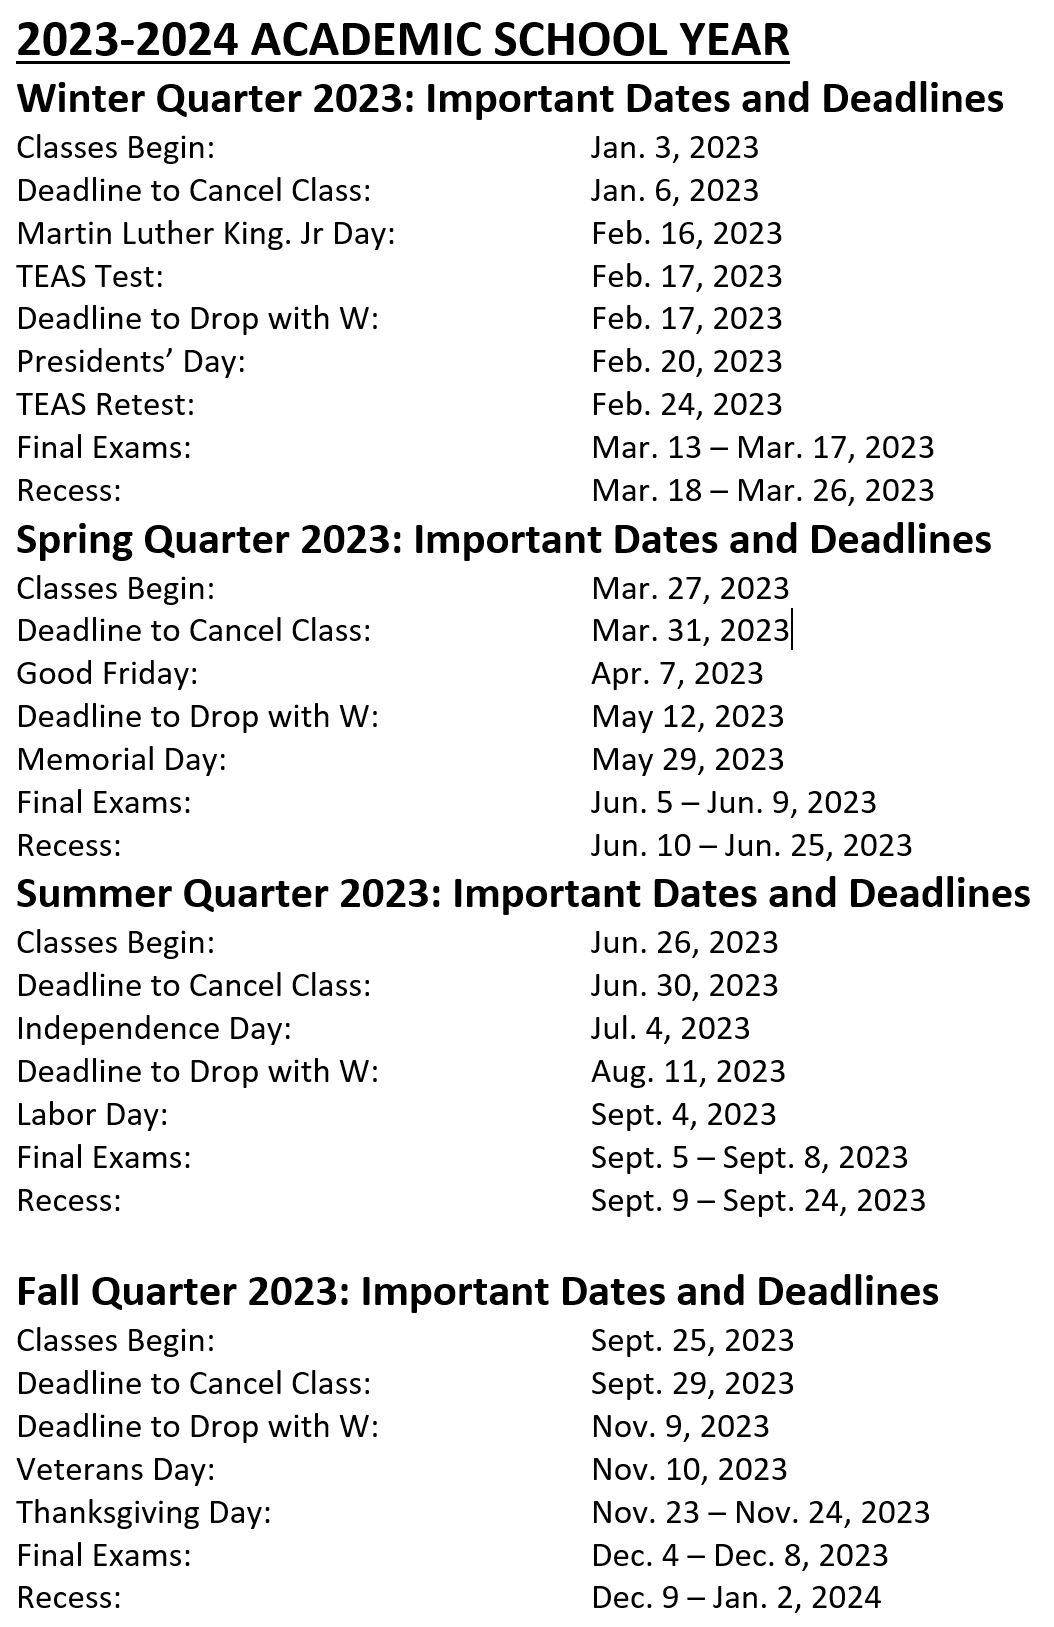 Nova Southeastern University Academic Calendar 2025 2026